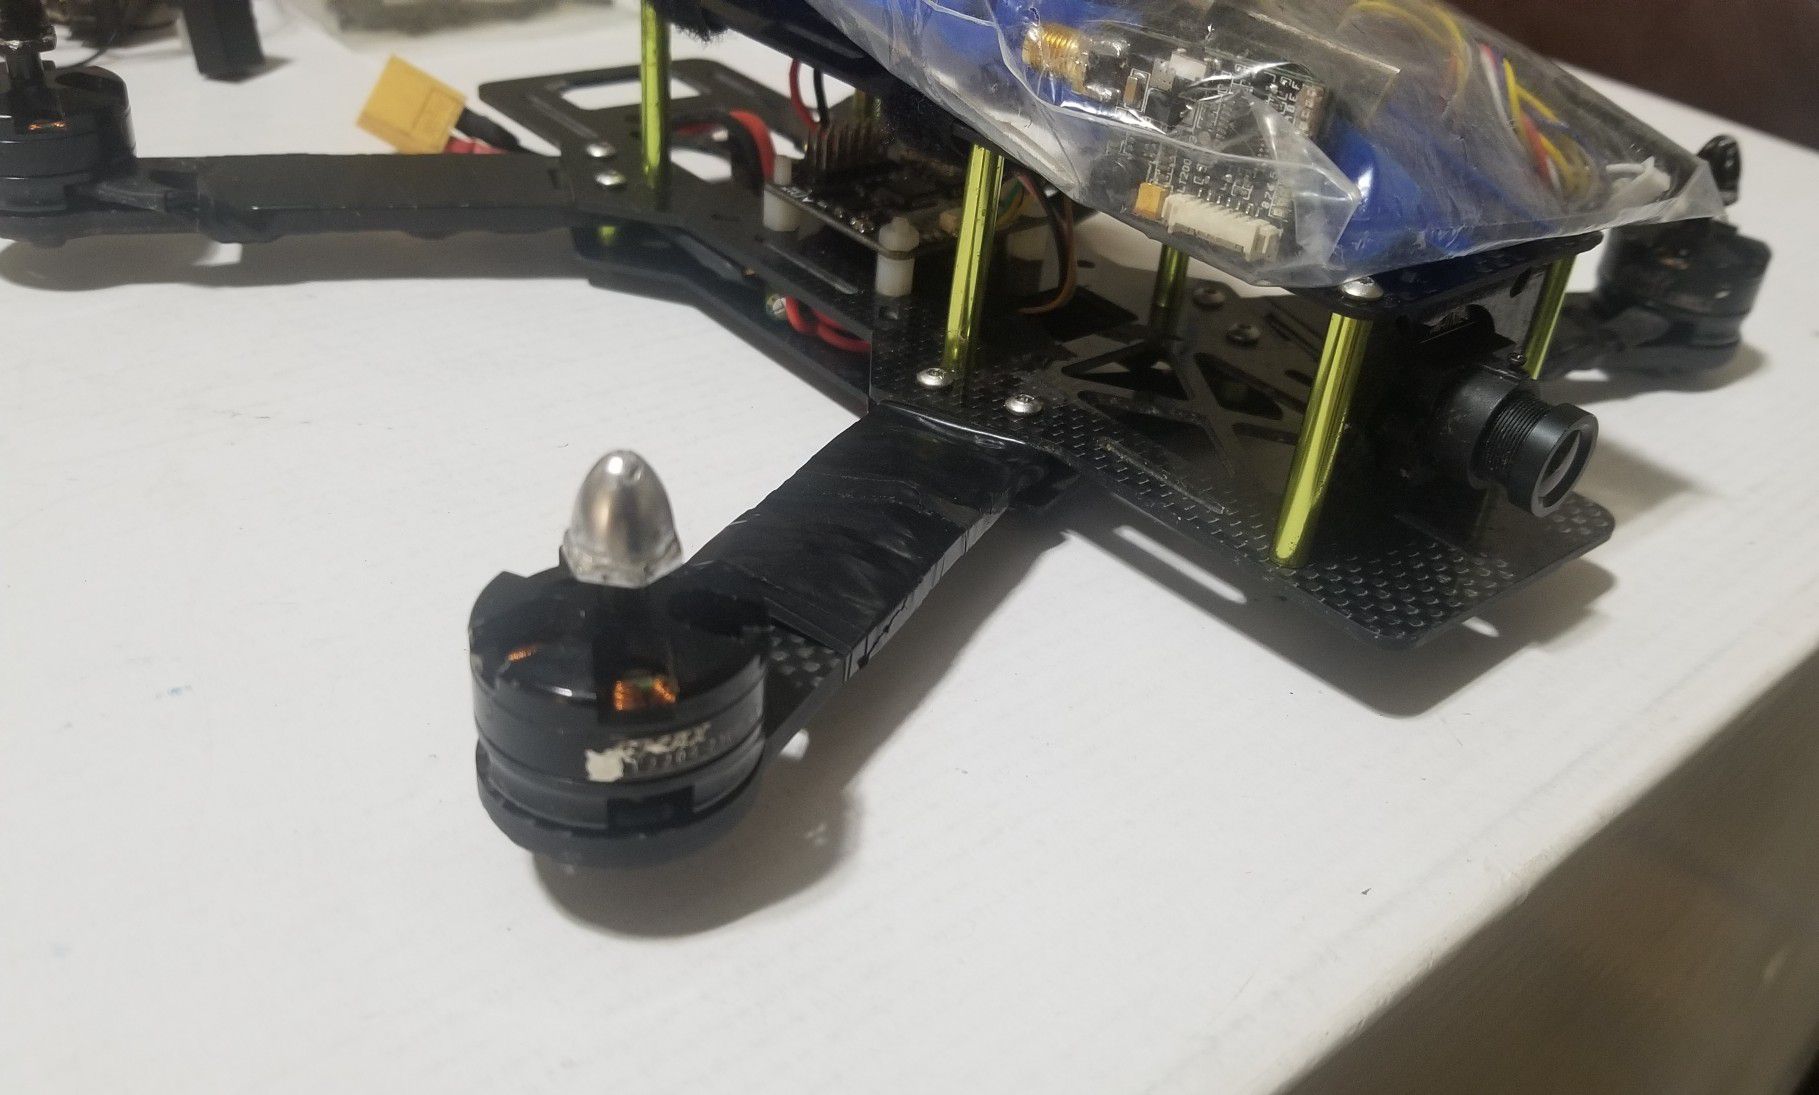 Fpv racing drone